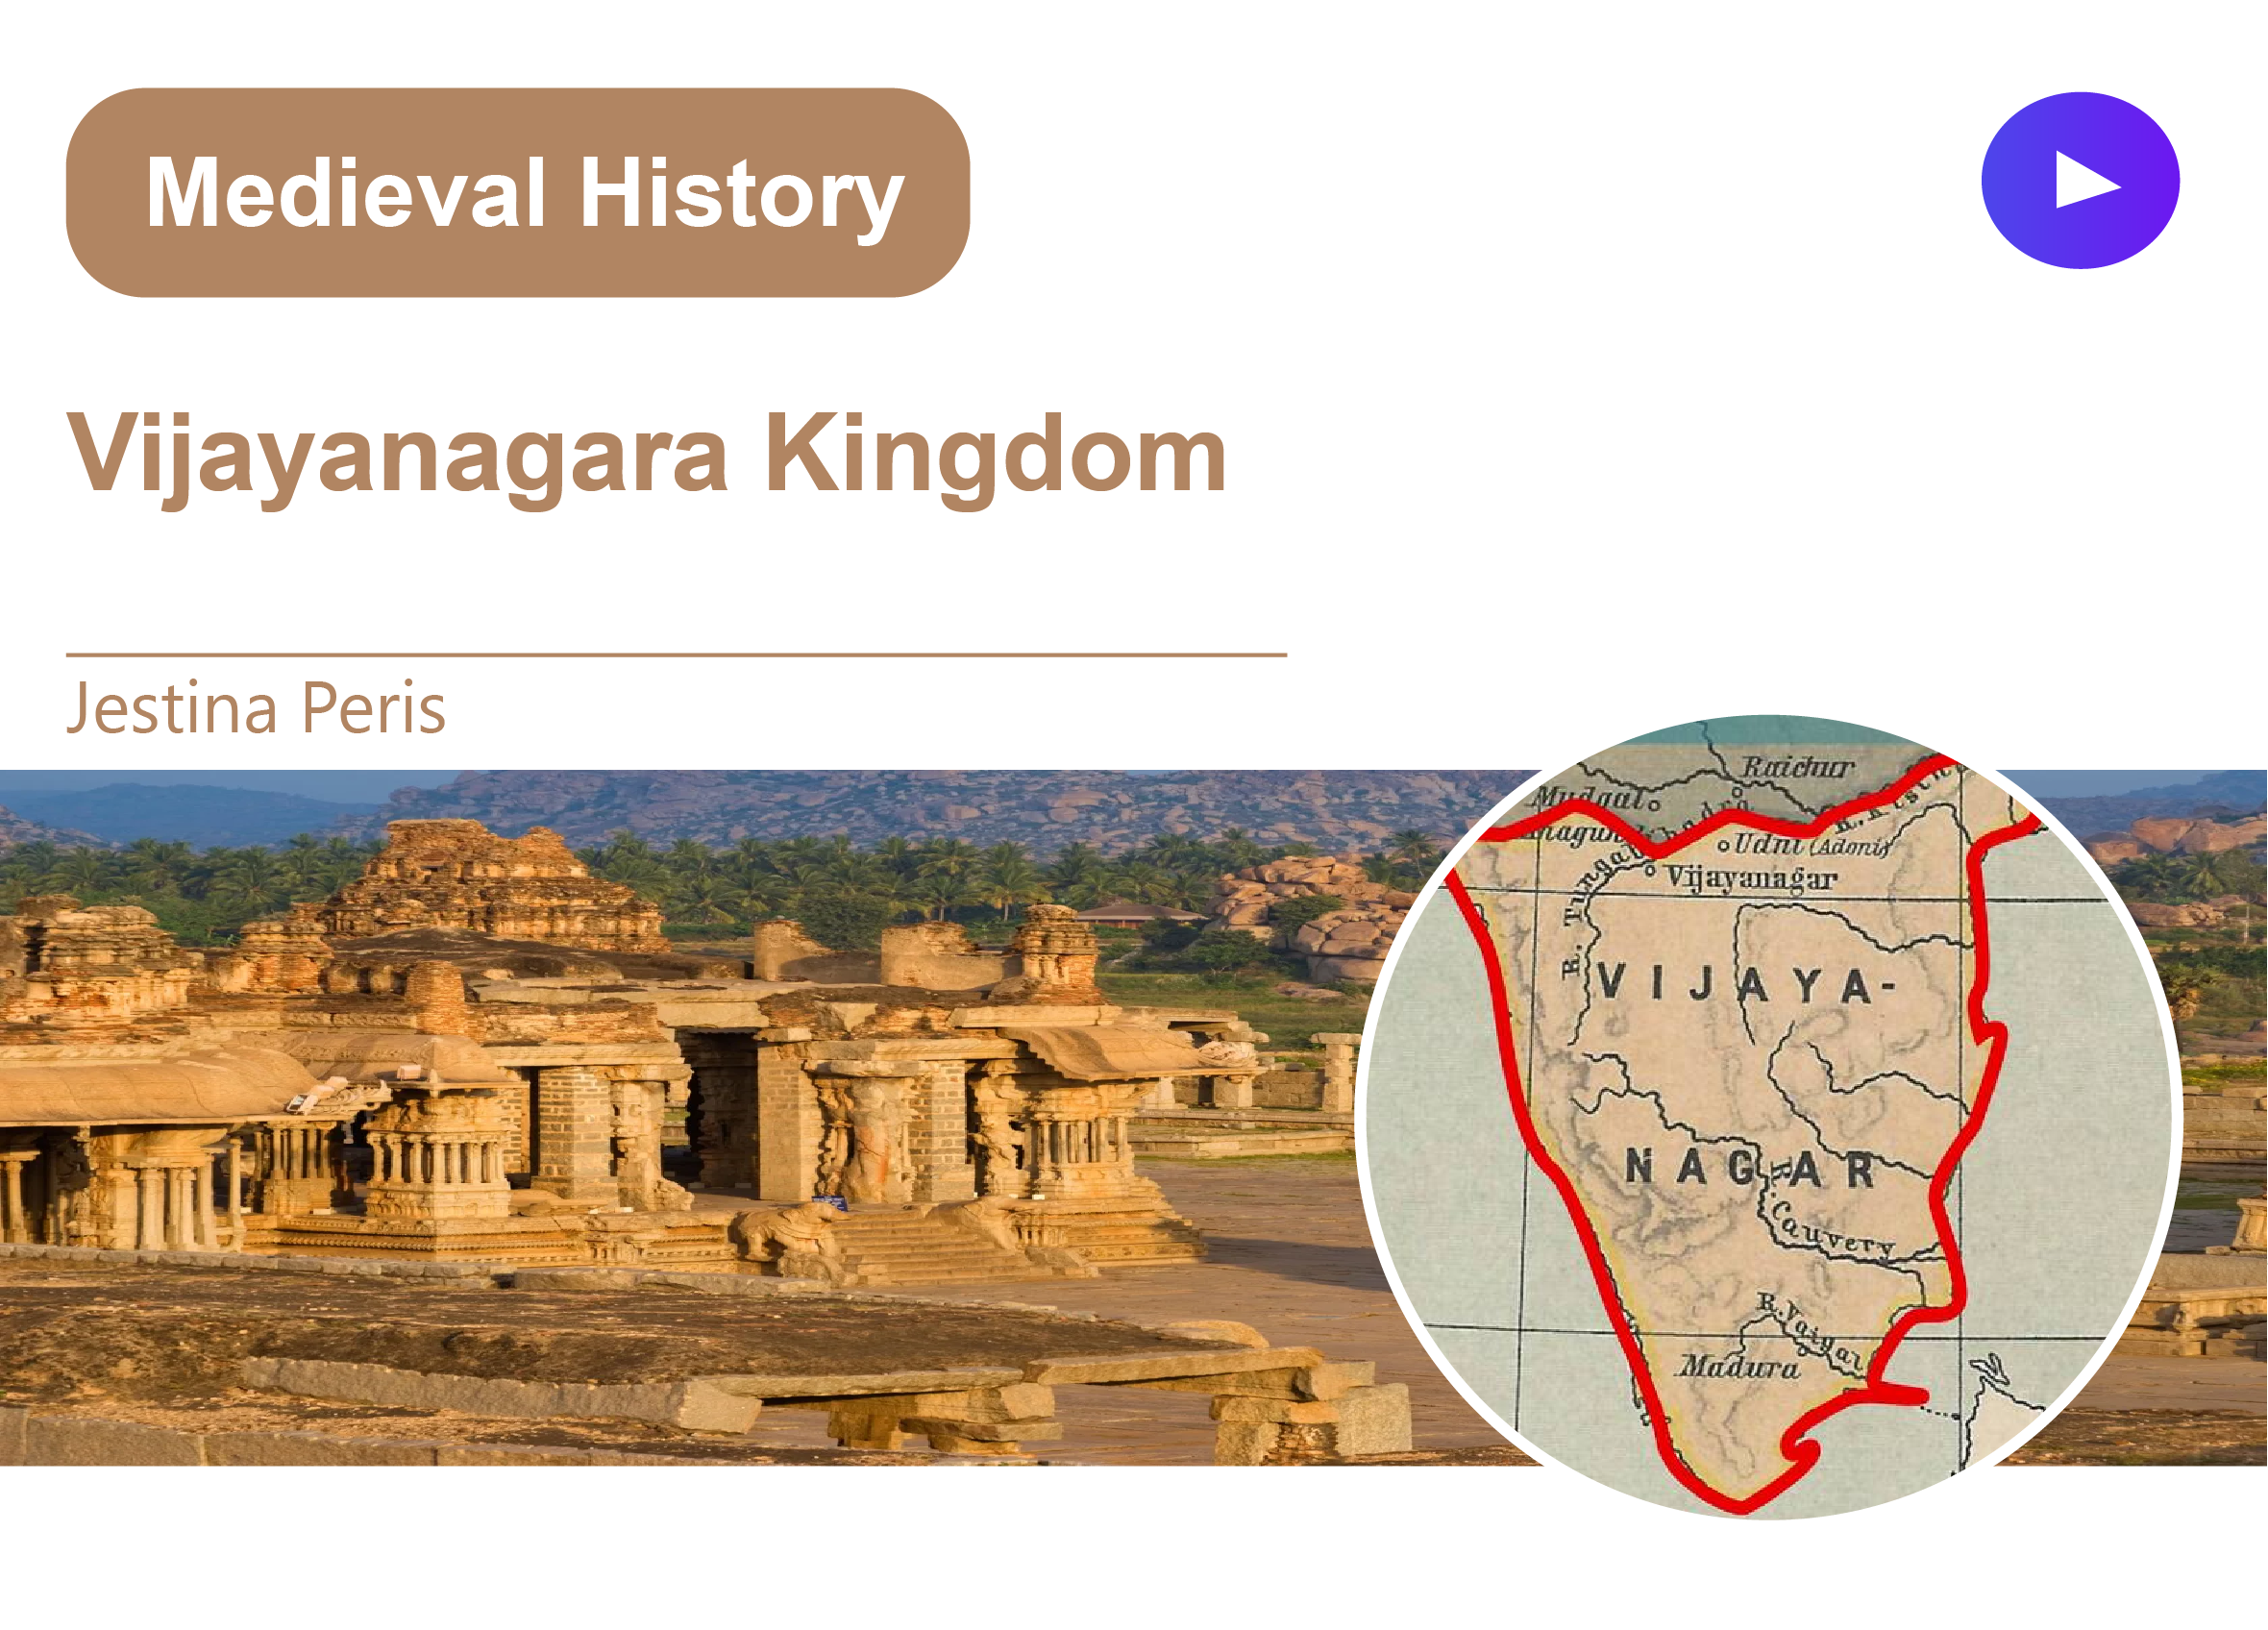 Vijayanagara Kingdom